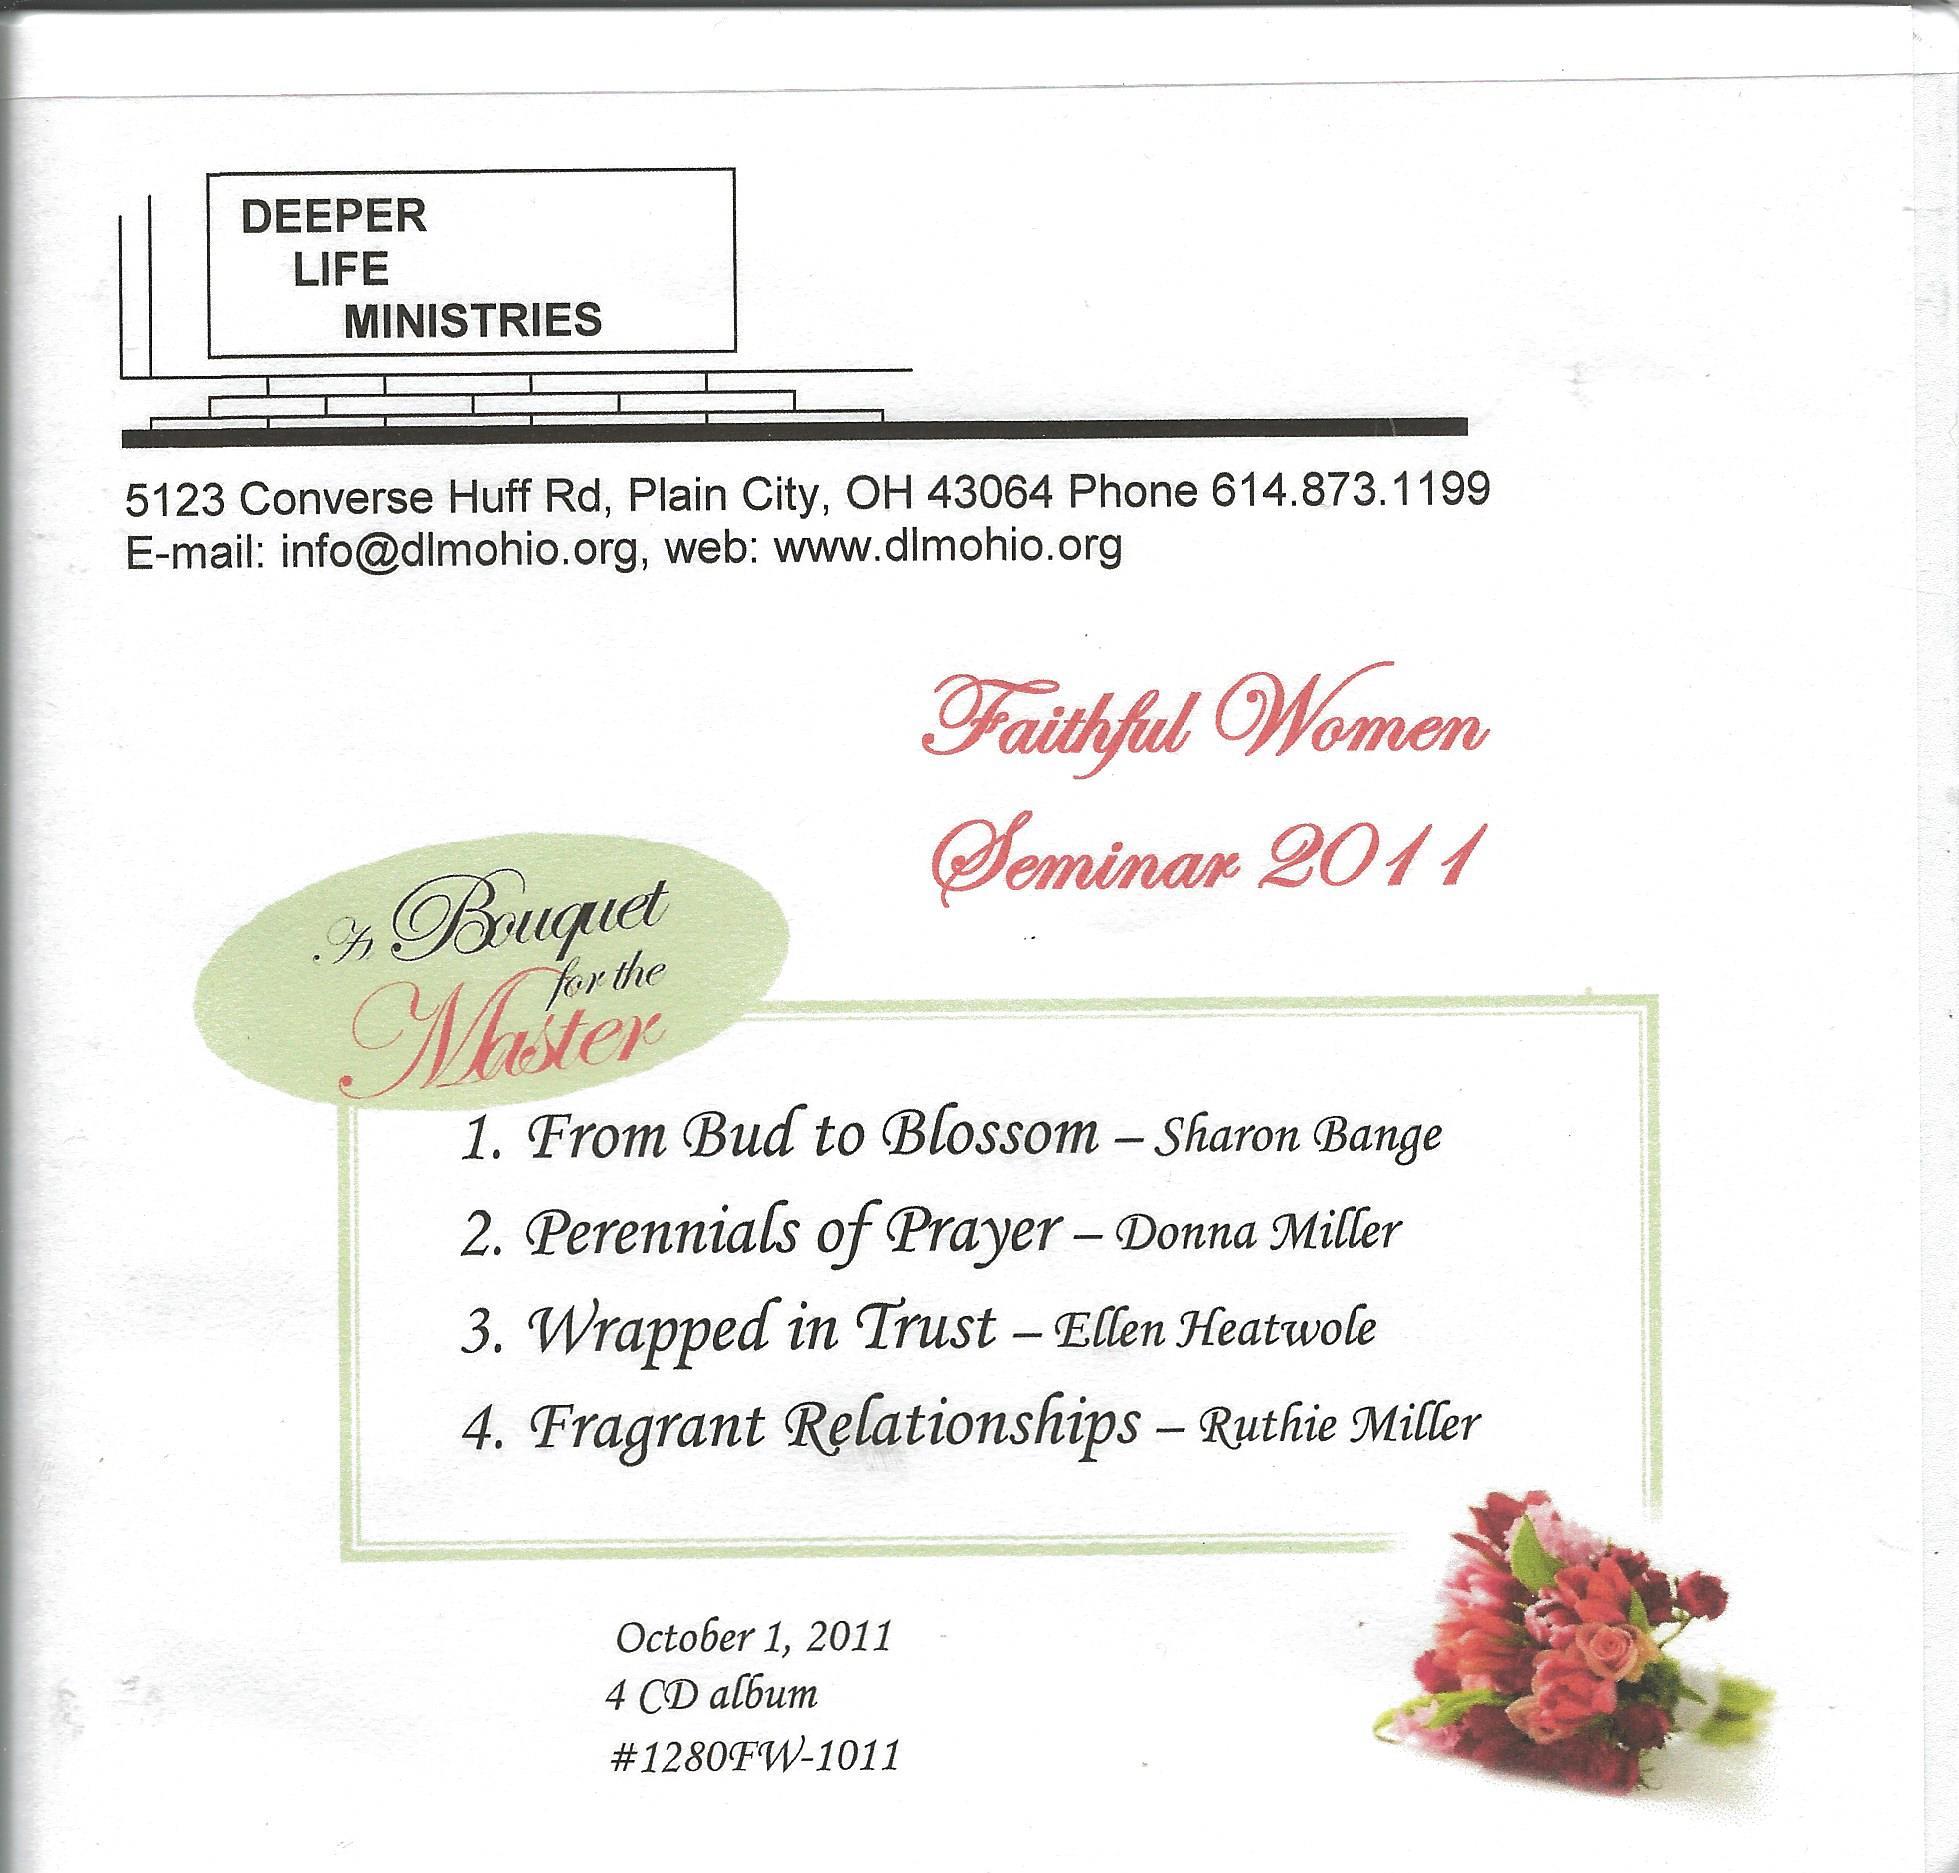 FAITHFUL WOMEN SEMINAR 2011 4 CD album